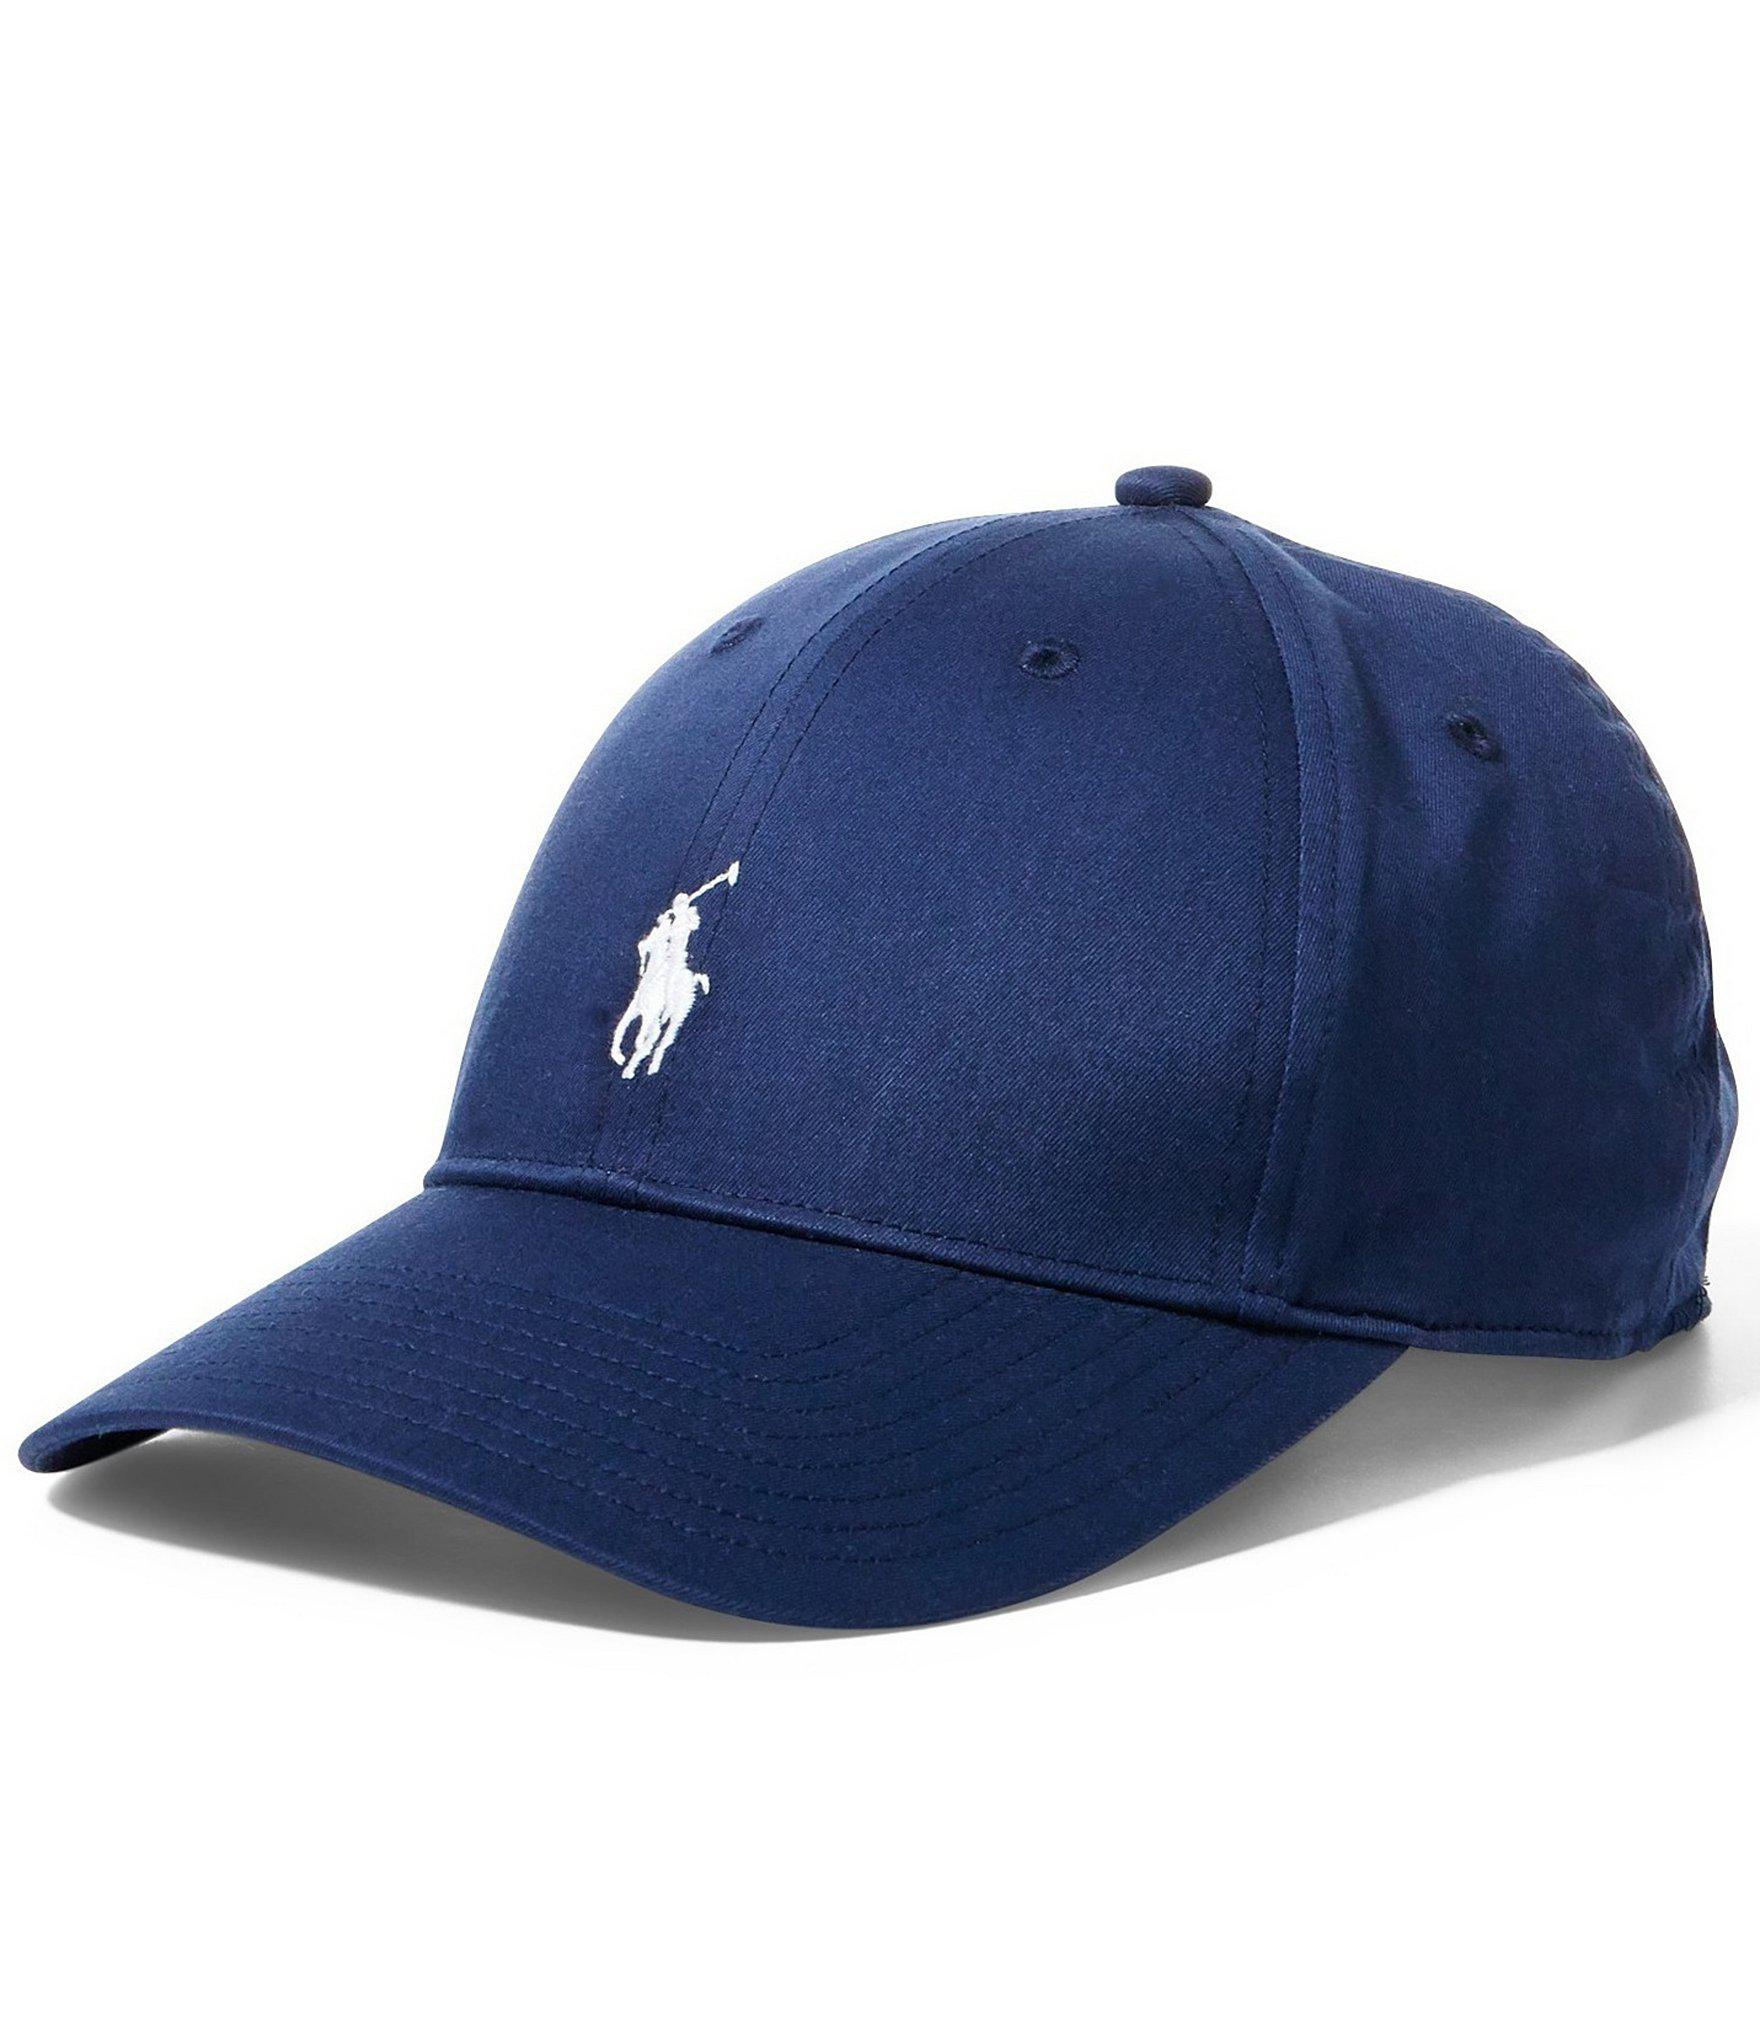 Lyst - Polo Ralph Lauren Men's Baseline Hat in Blue for Men